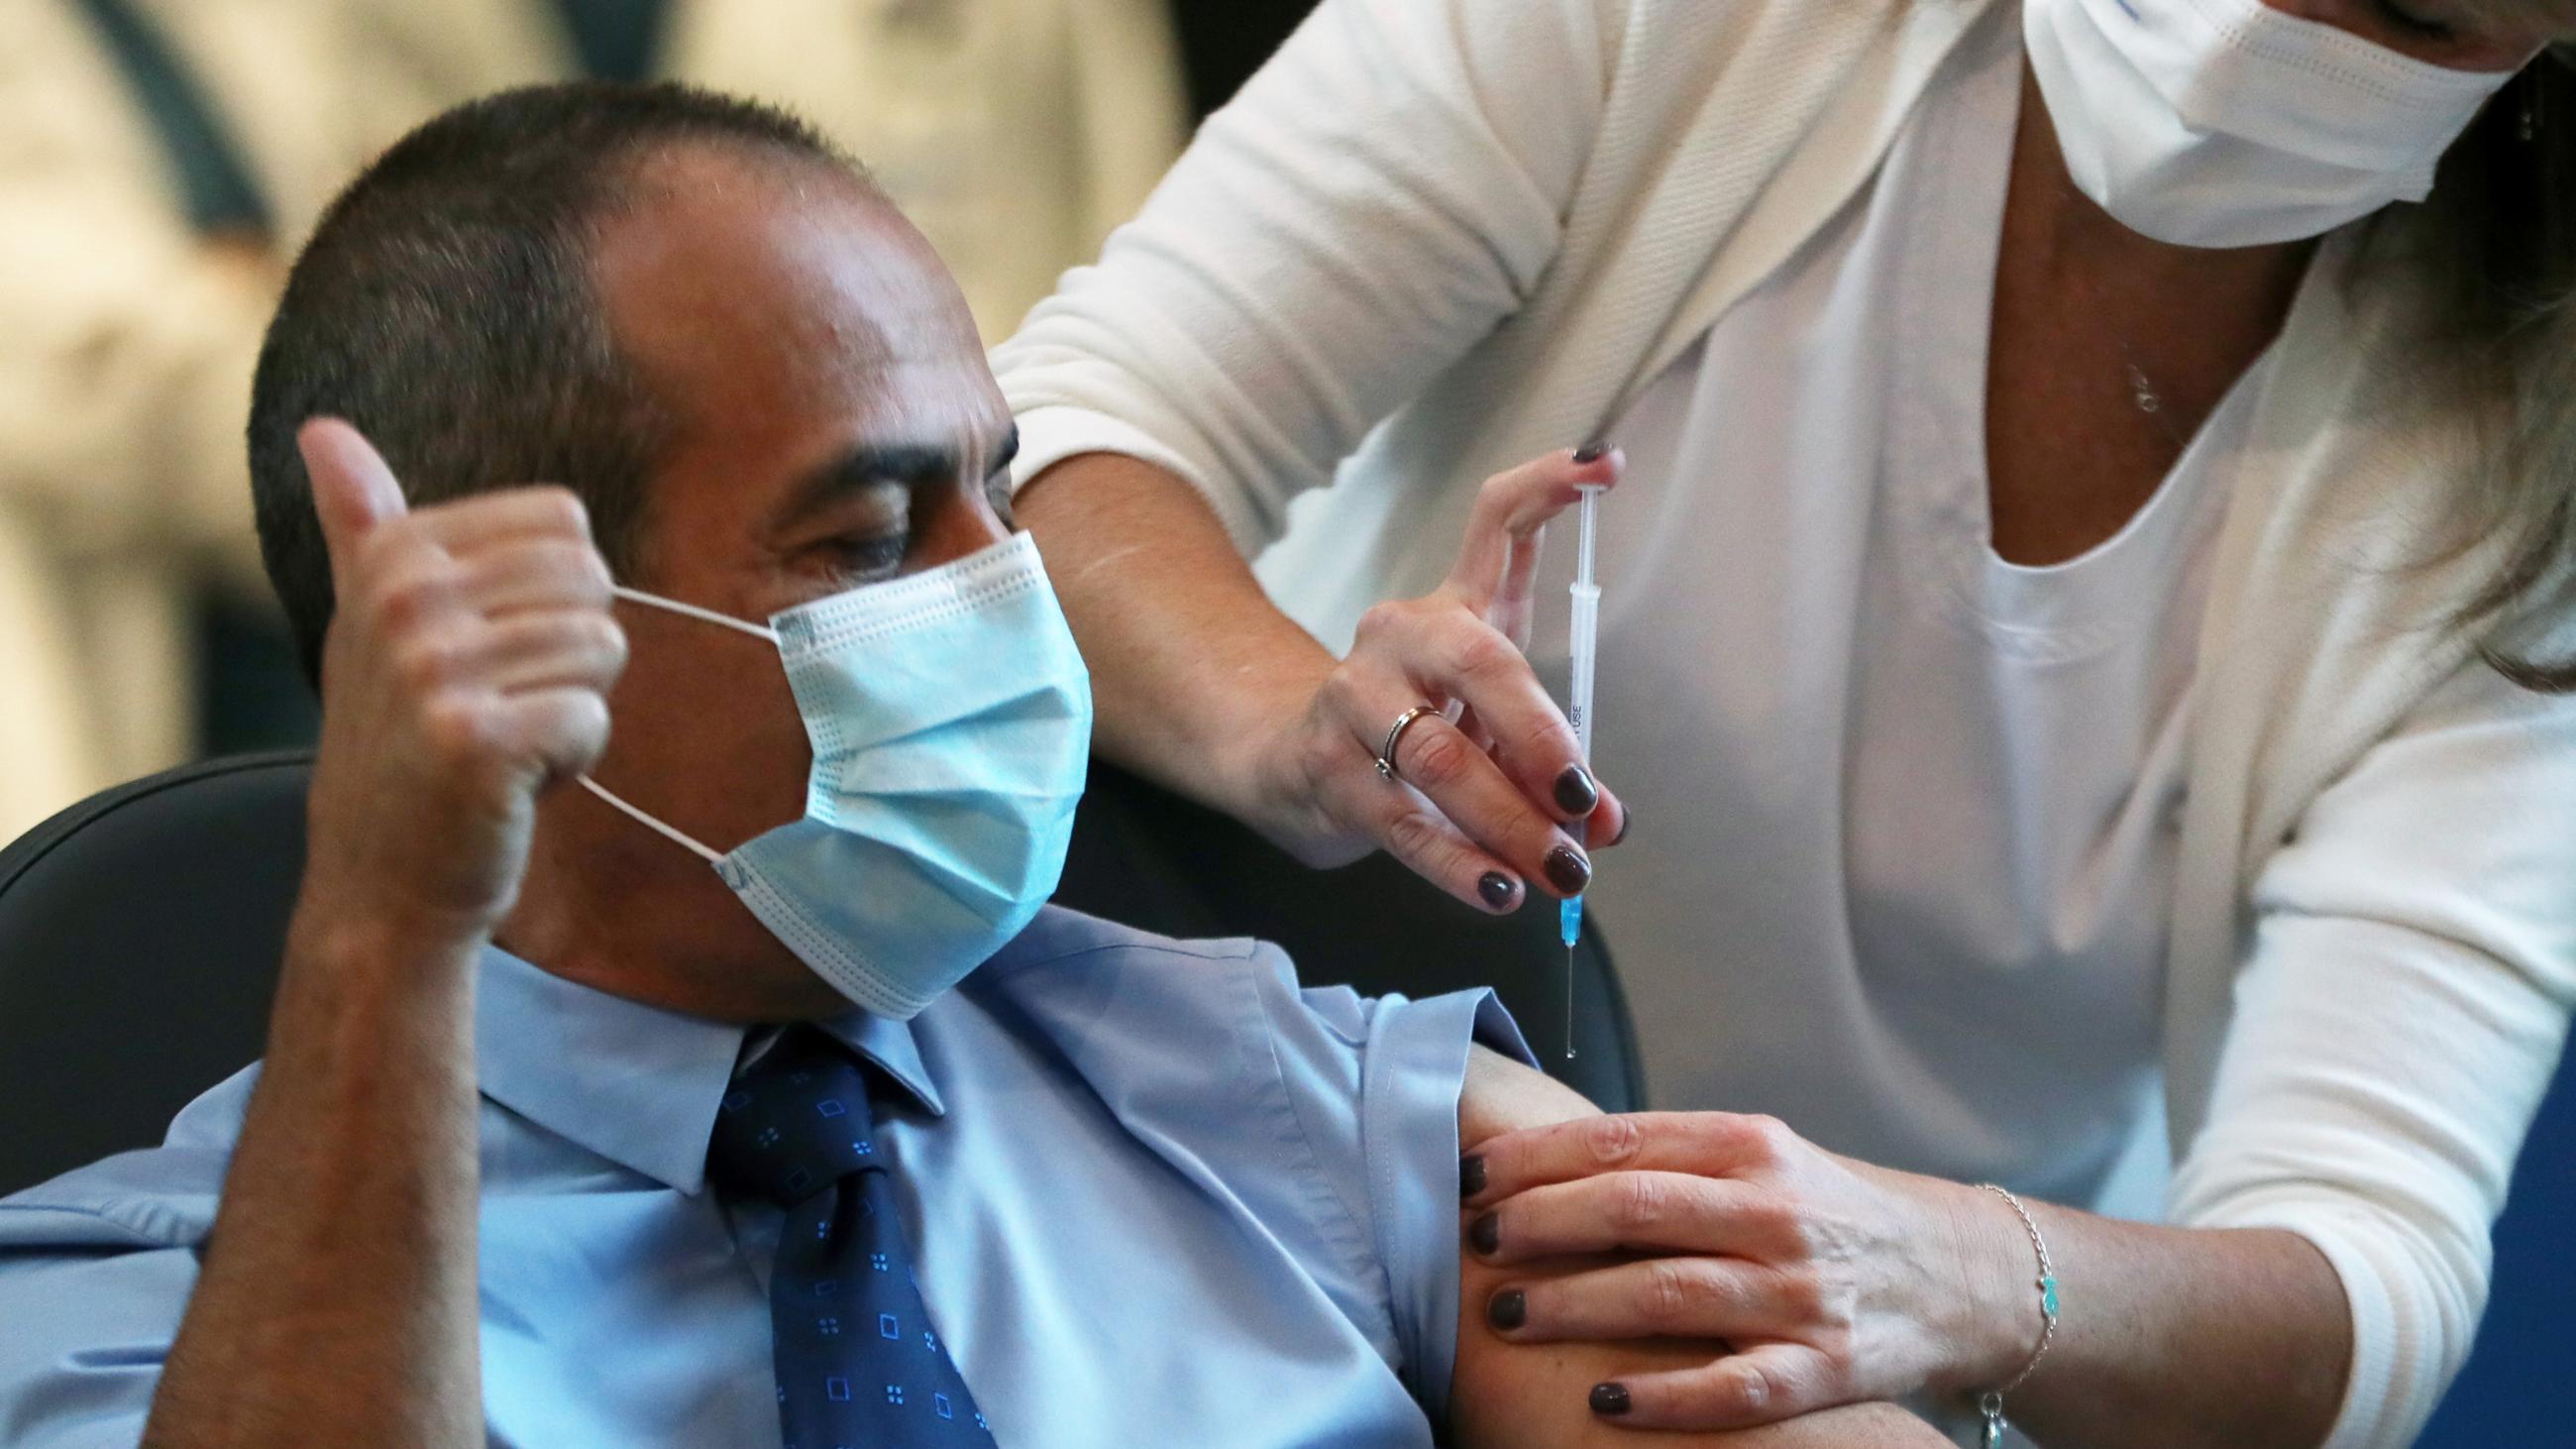 A medical worker vaccinates a man against the coronavirus disease as Israel kicks off a coronavirus vaccination drive, at Tel Aviv Sourasky Medical Center in Tel Aviv, Israel on December 20, 2020.